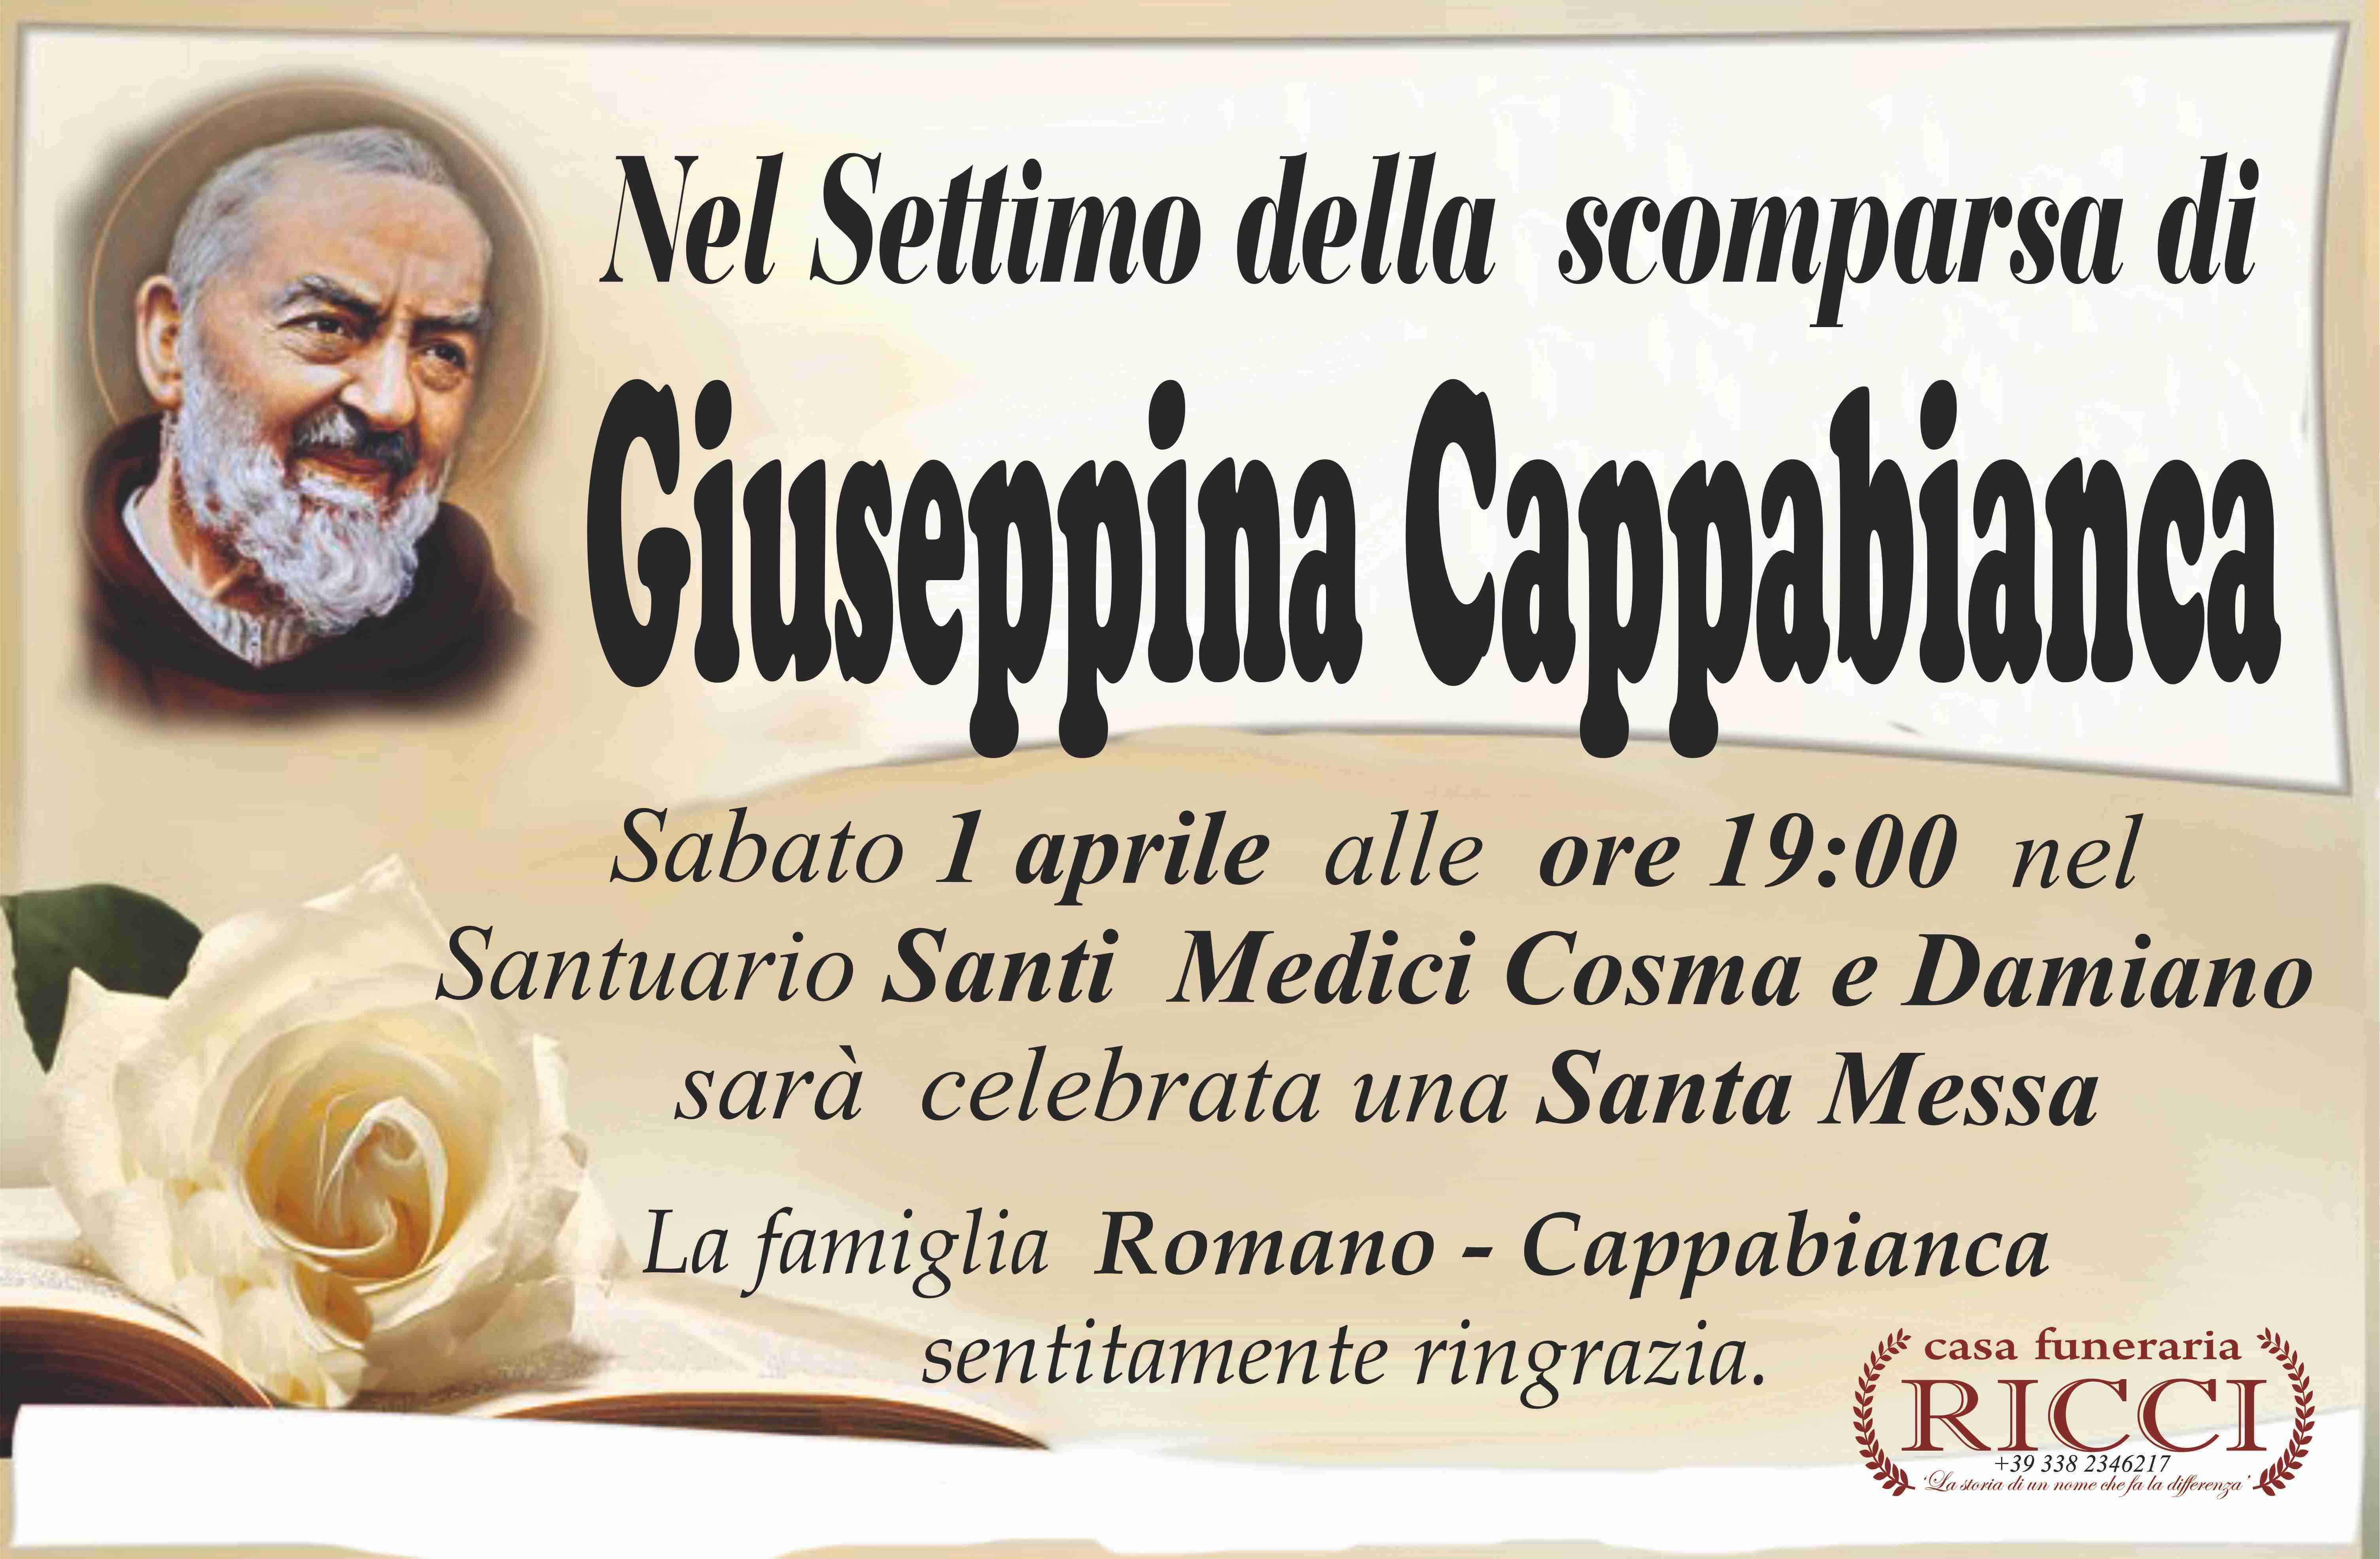 Giuseppina Cappabianca